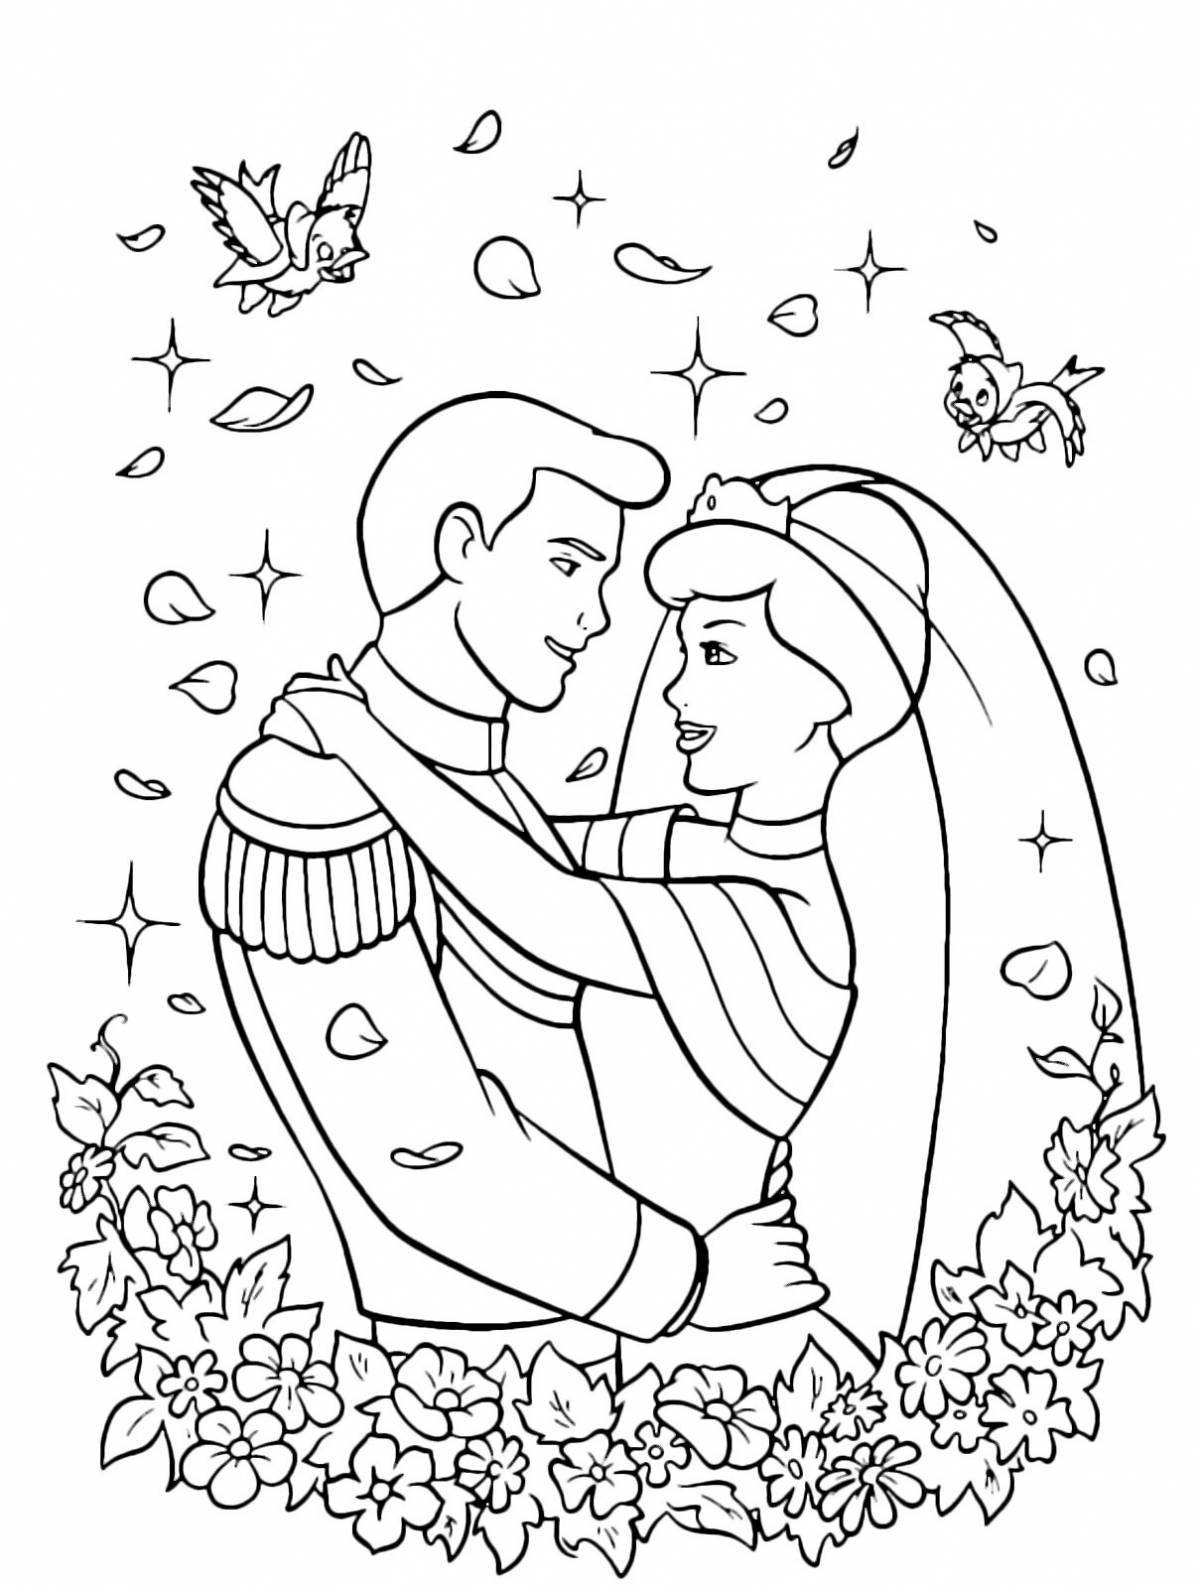 Exquisite wedding anniversary coloring book